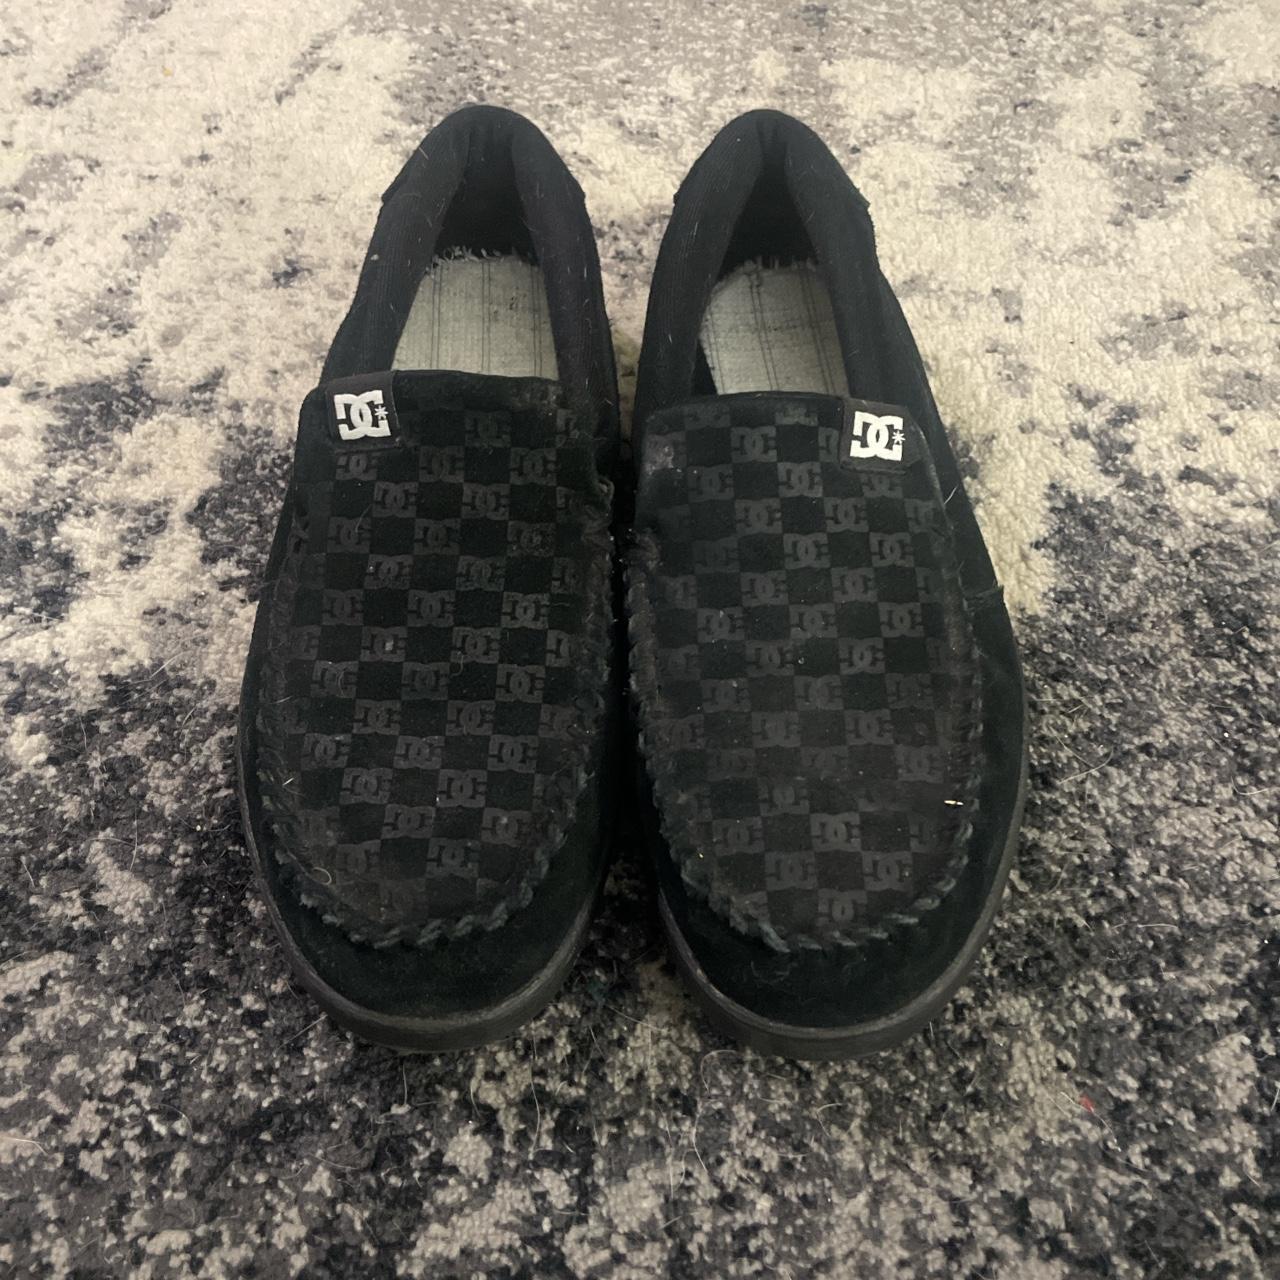 Black dc loafers -no insole -pretty worn -little messy - Depop